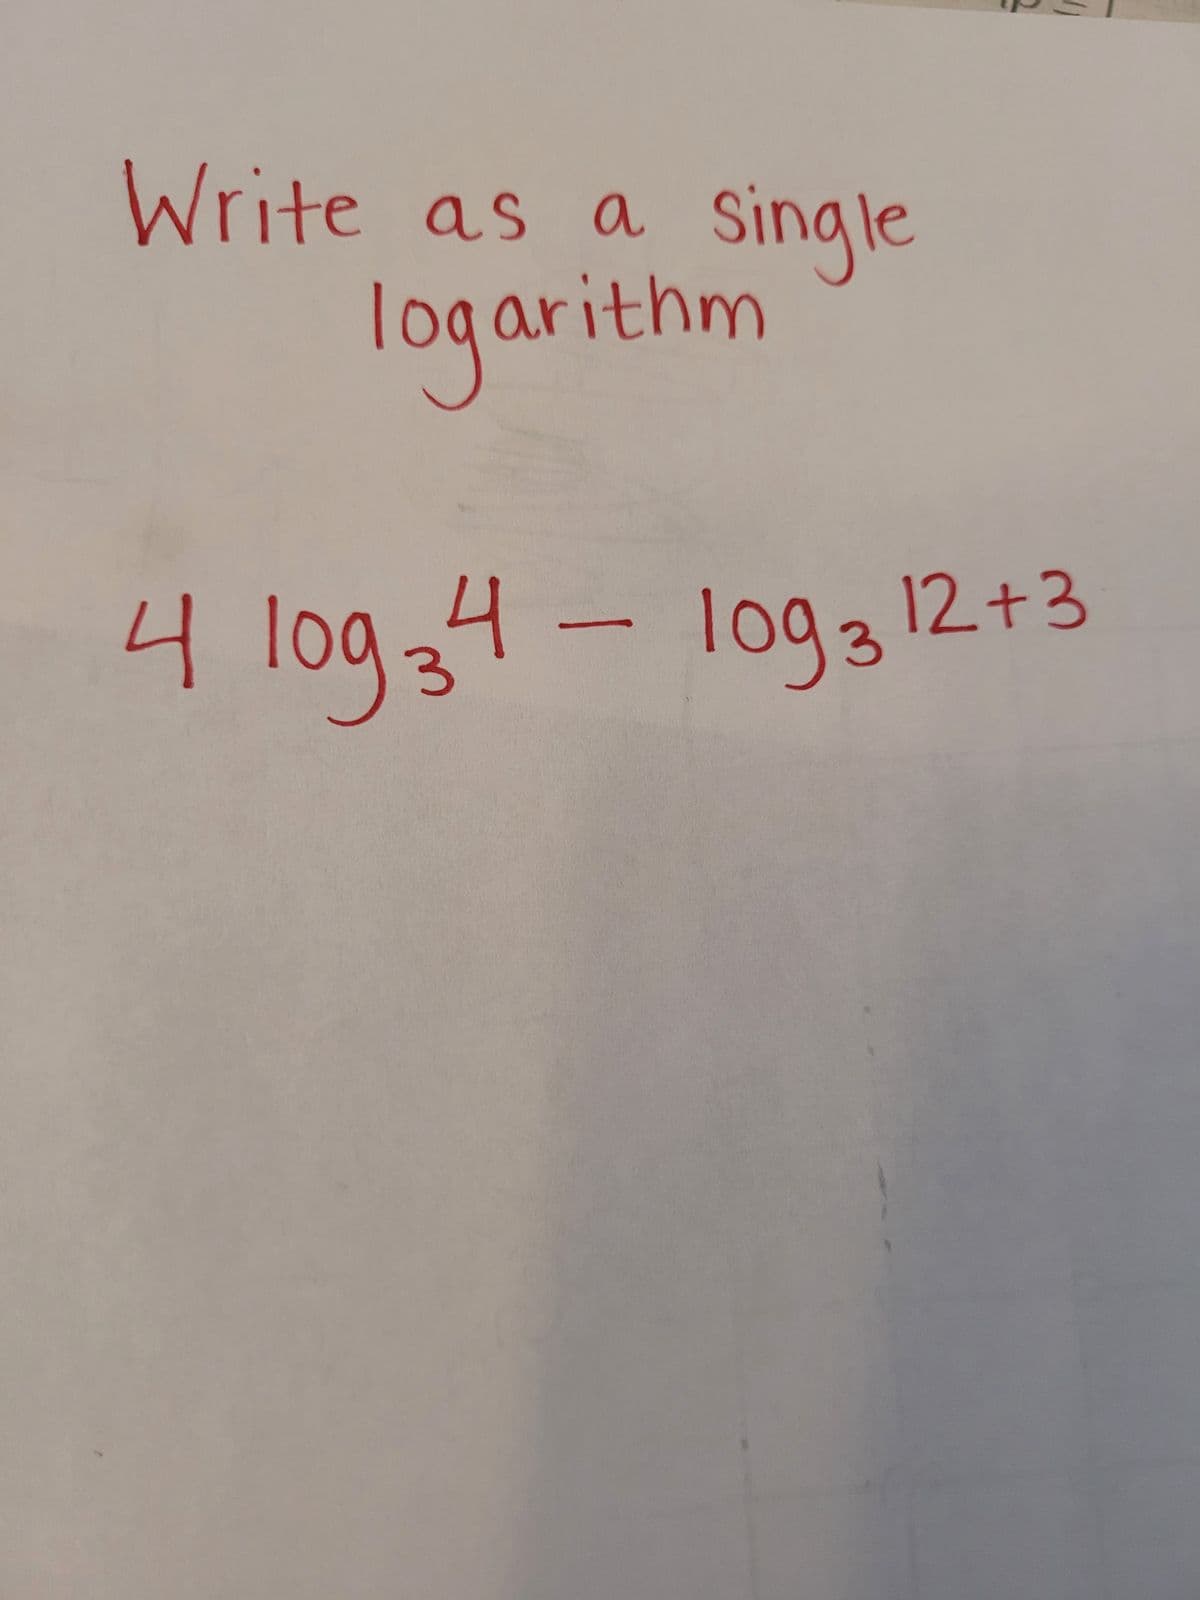 Write as a
a single
logarithm
log
4 109 34 - 1093 12+3